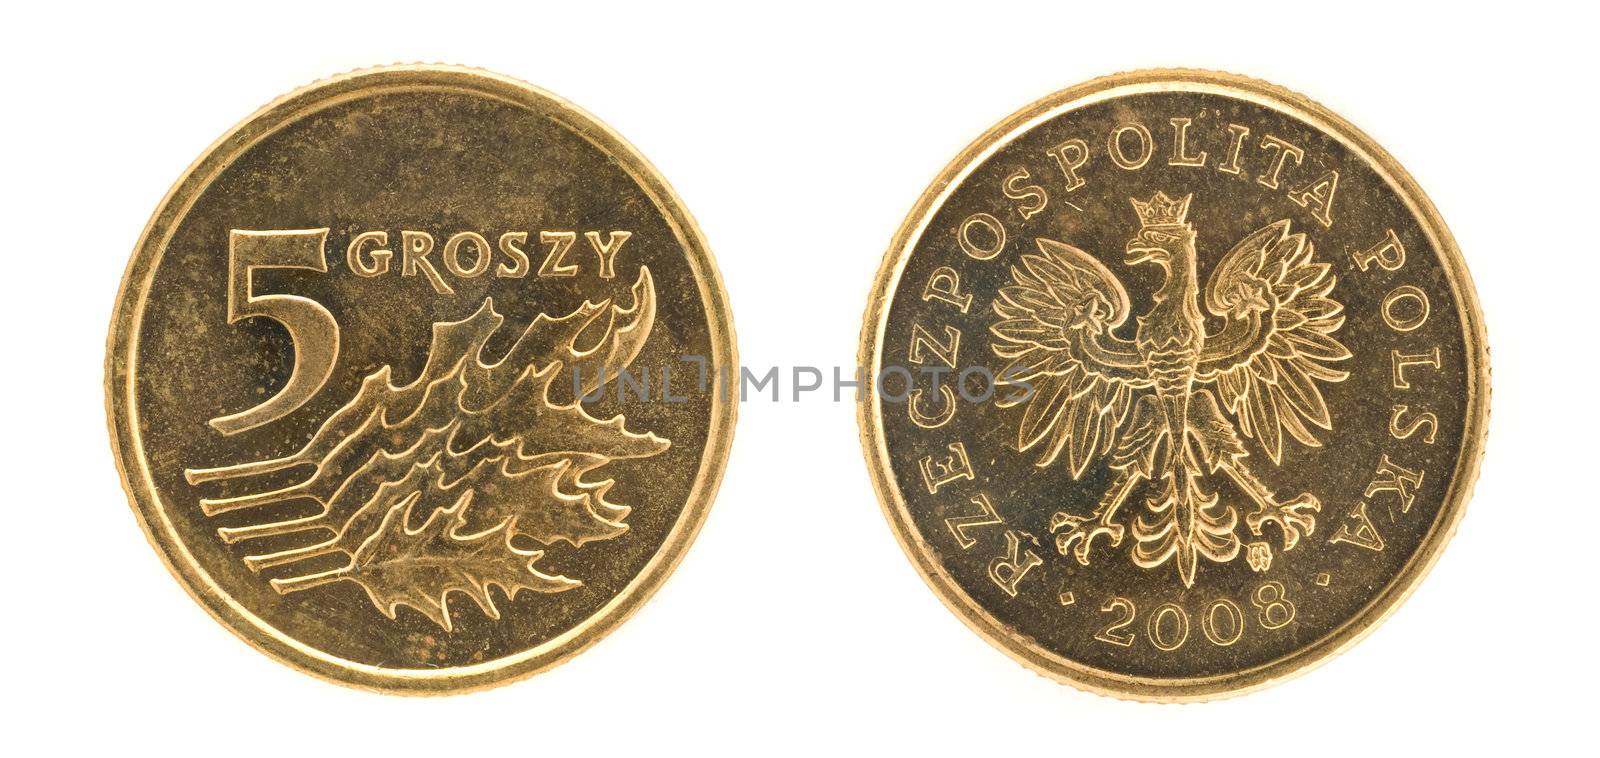 5 groszy - money of Poland. Obverse and reverse